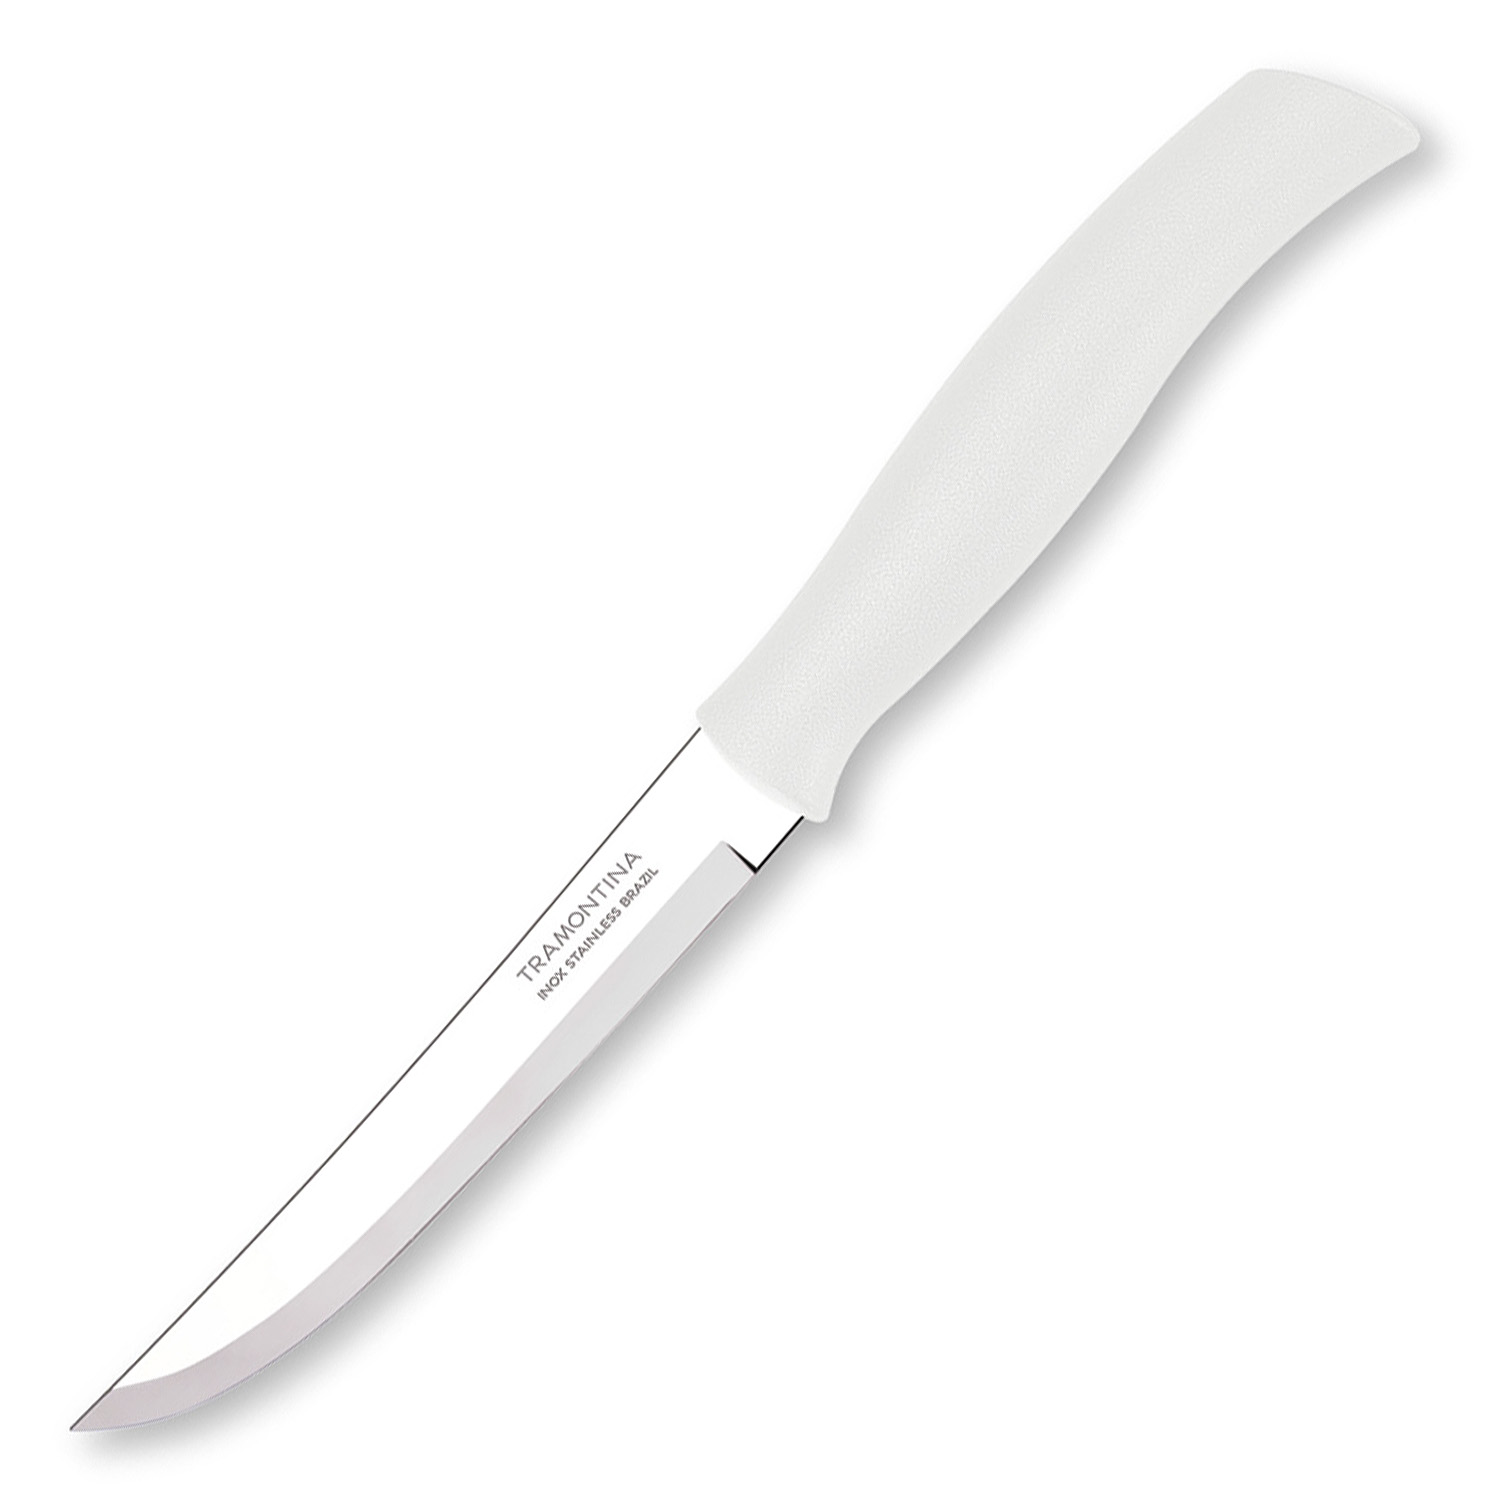 Нож Athus 127мм/216мм для стейка гладкий белый 3шт/уп